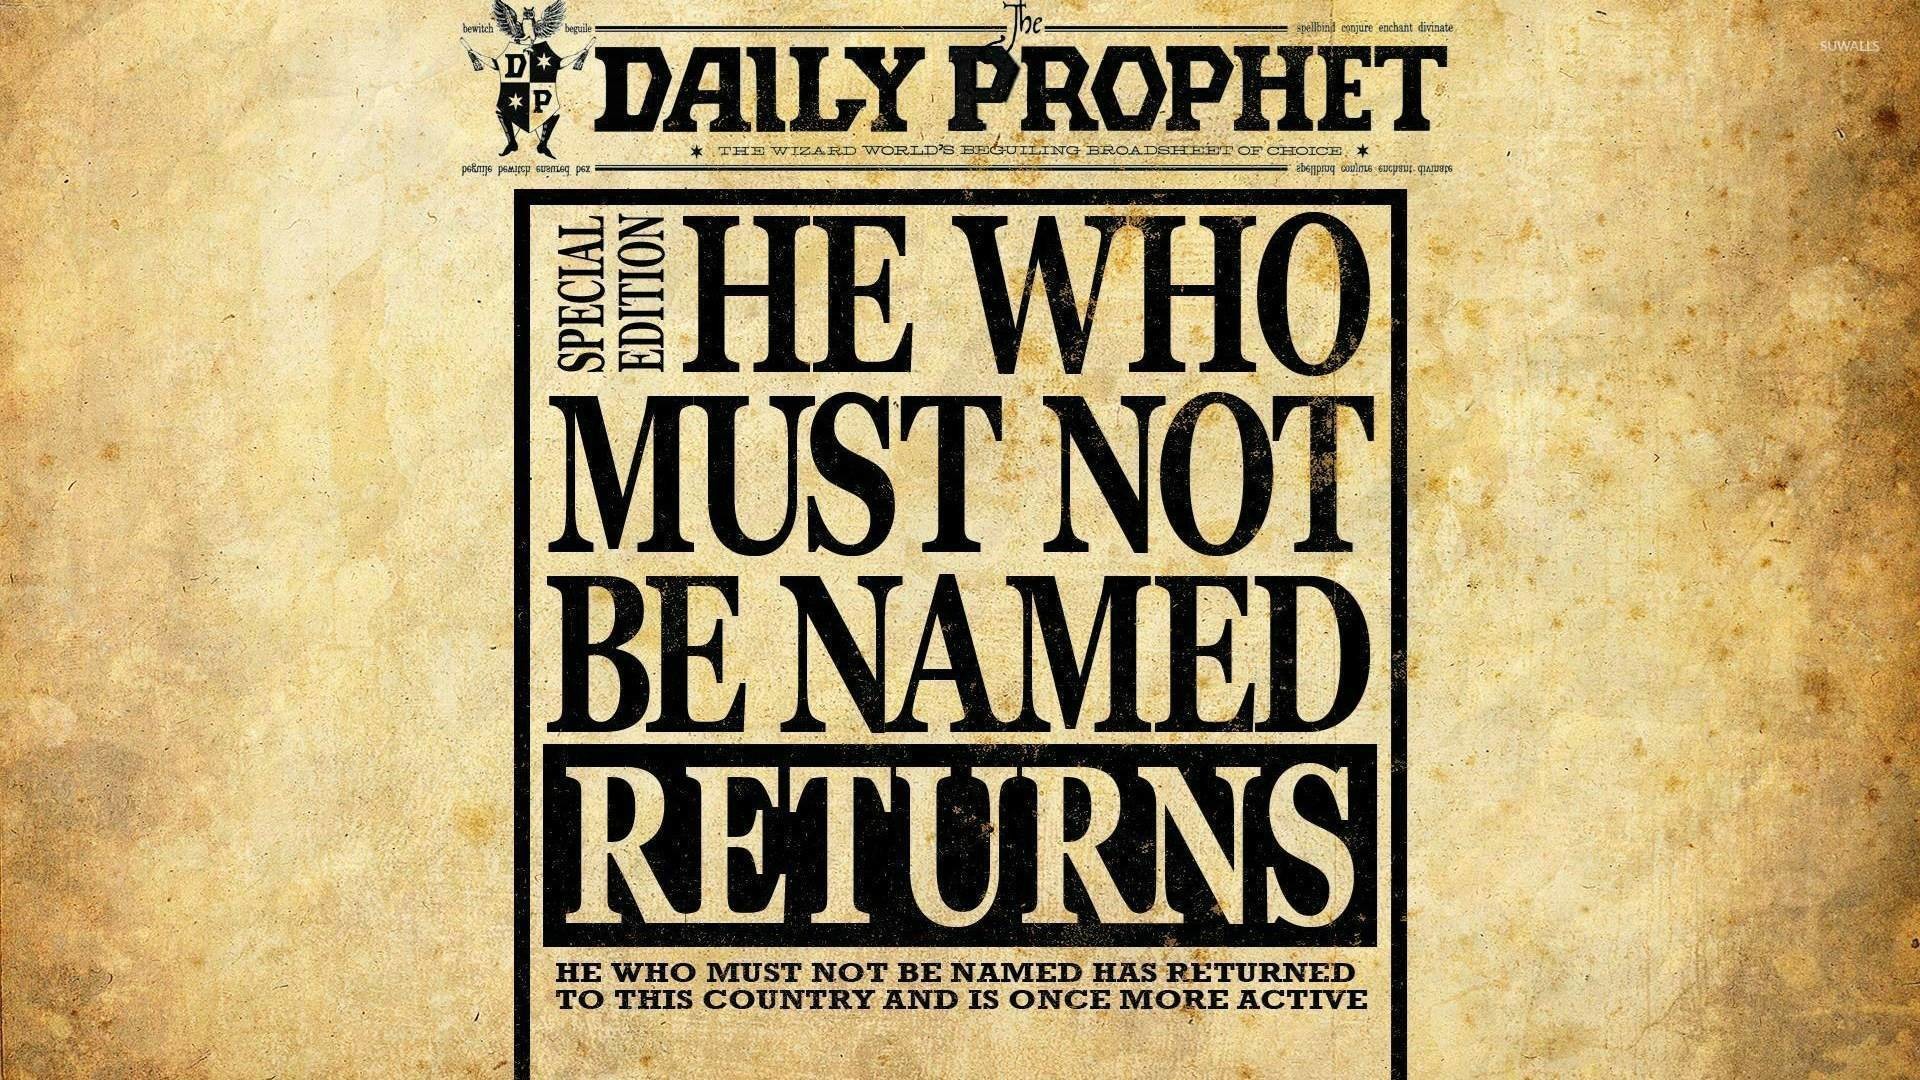 Data-src - Harry Potter Wallpaper Daily Prophet - HD Wallpaper 